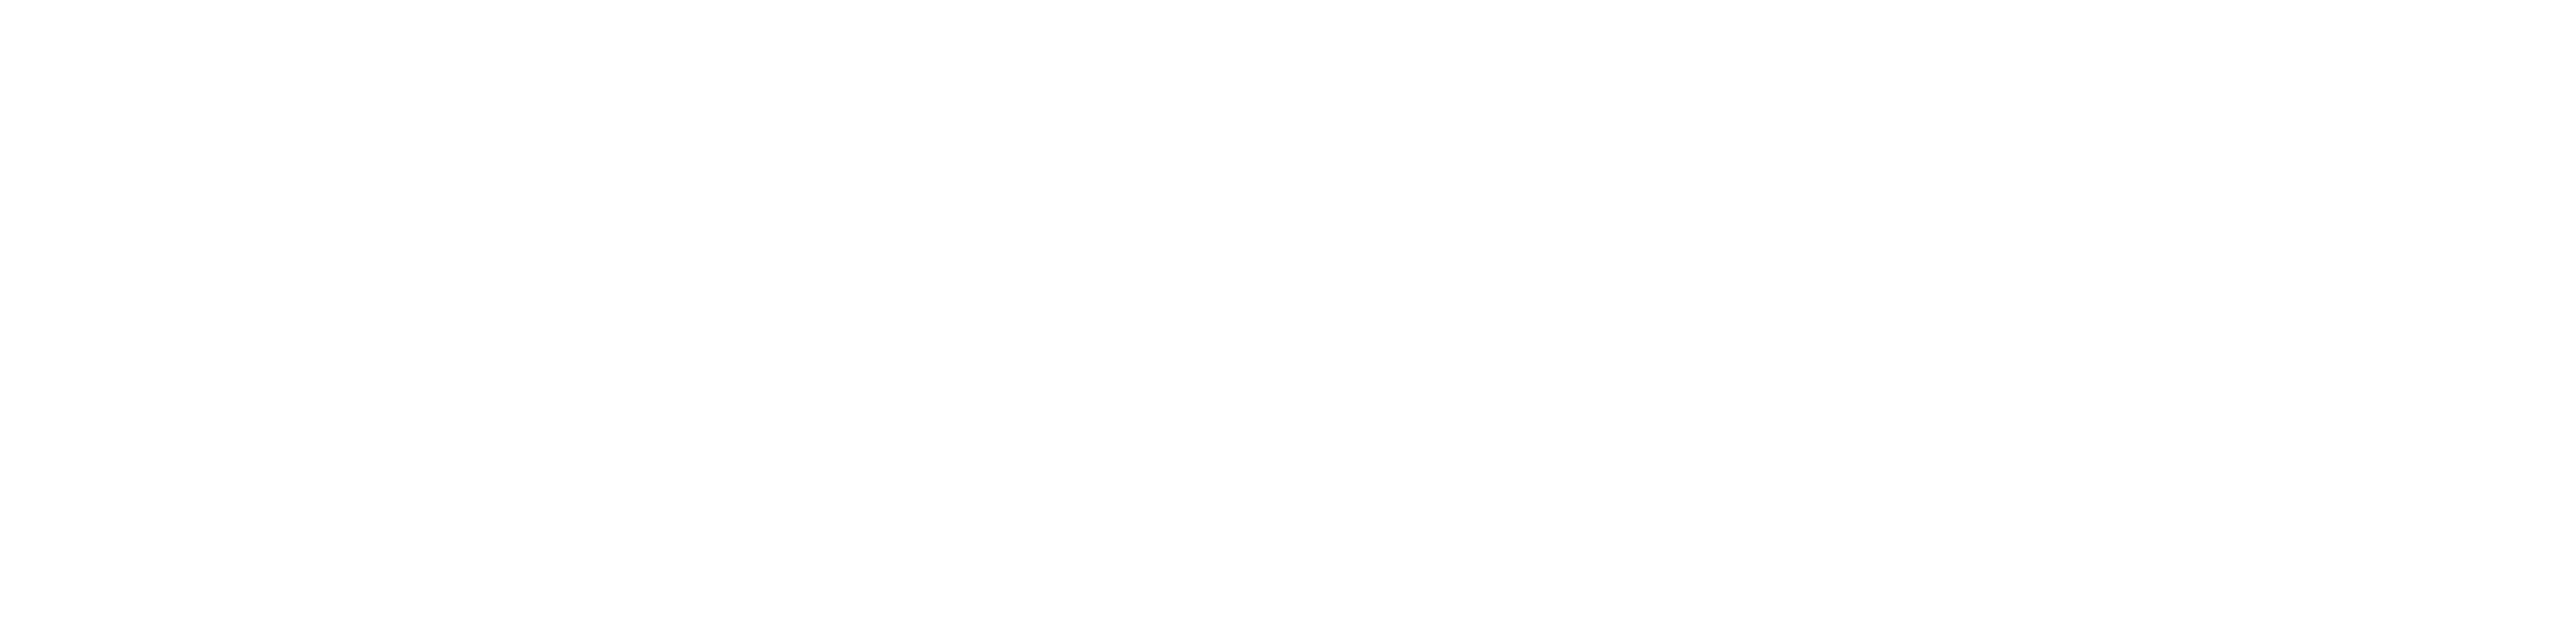 Davao Women logo white version